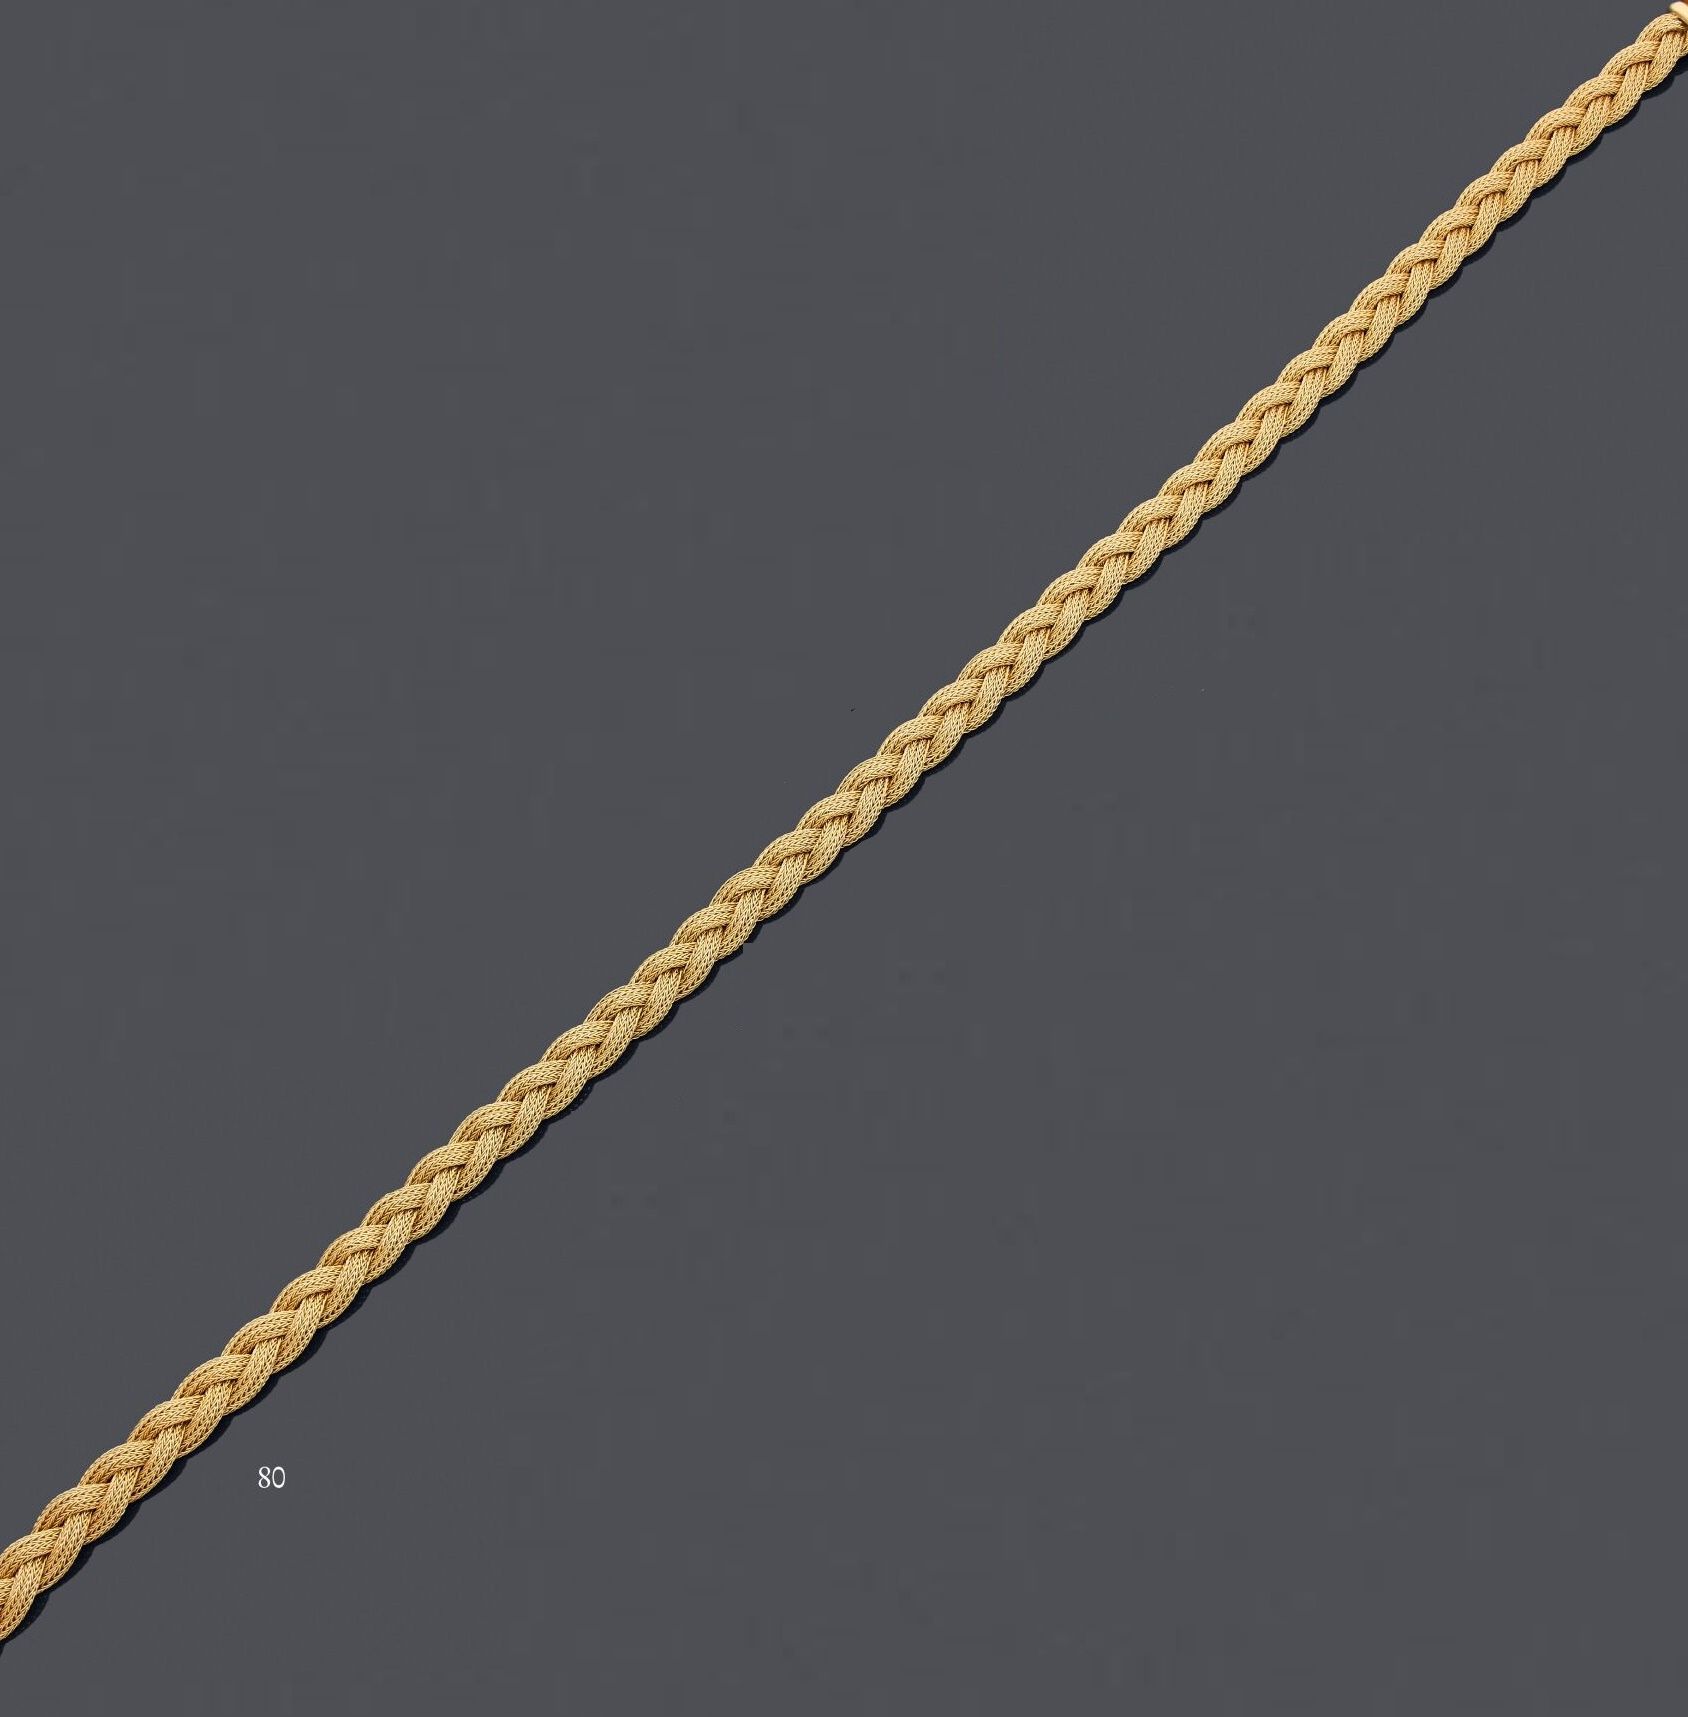 Null 75 万分之黄金柔性项链，刻有辫子。 
长度：42 厘米
毛重：35.1 克